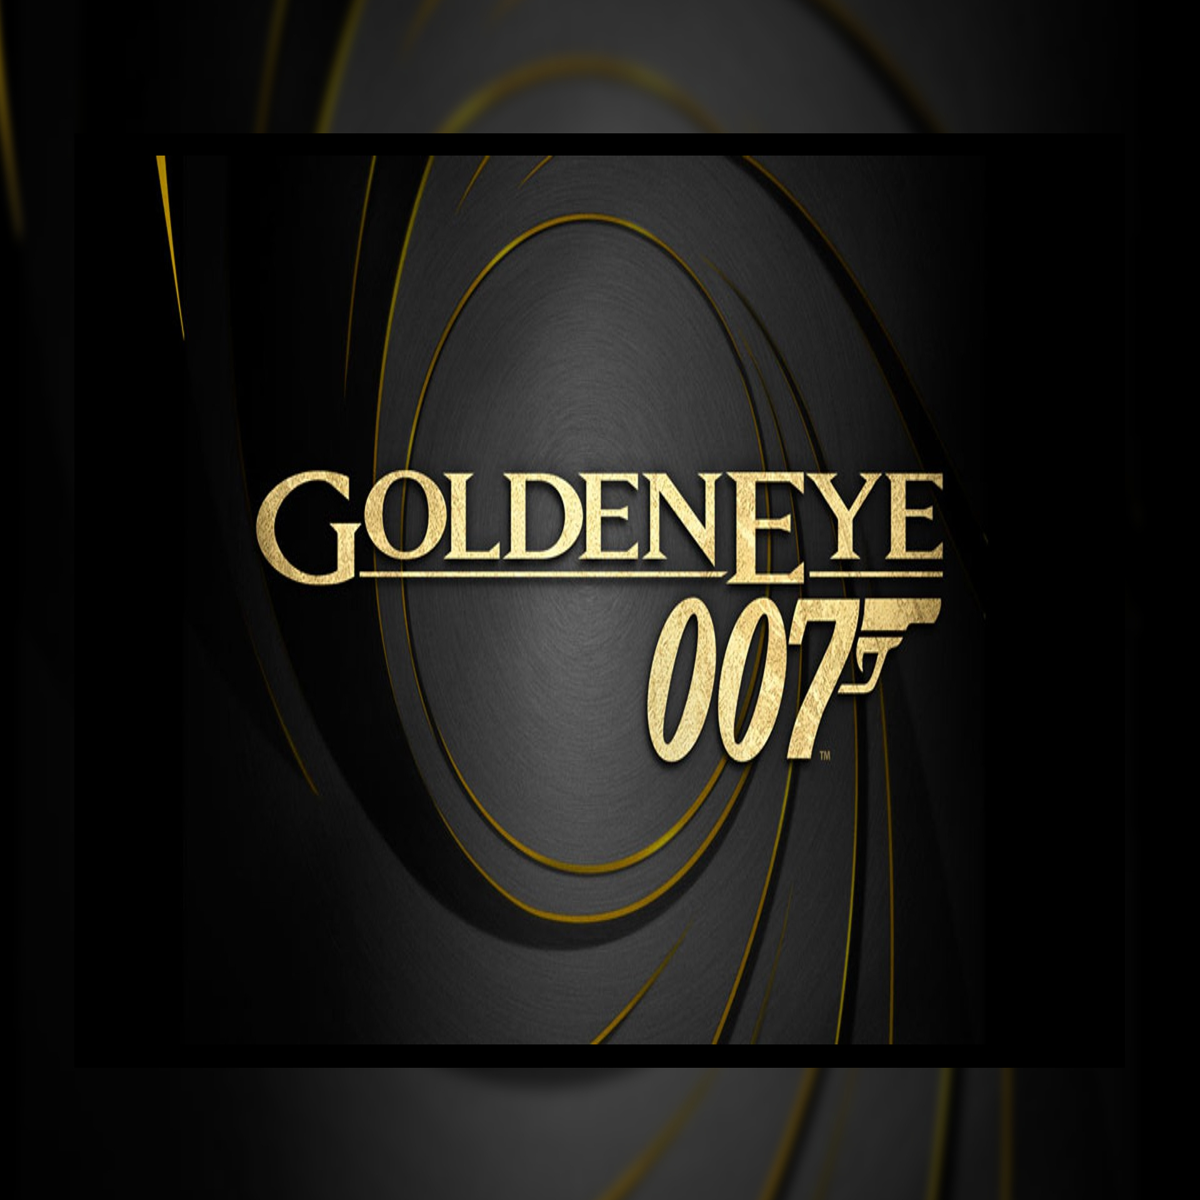 GoldenEye Reloaded: 'Double O Edition' PS3 bundle :: GoldenEye (VG